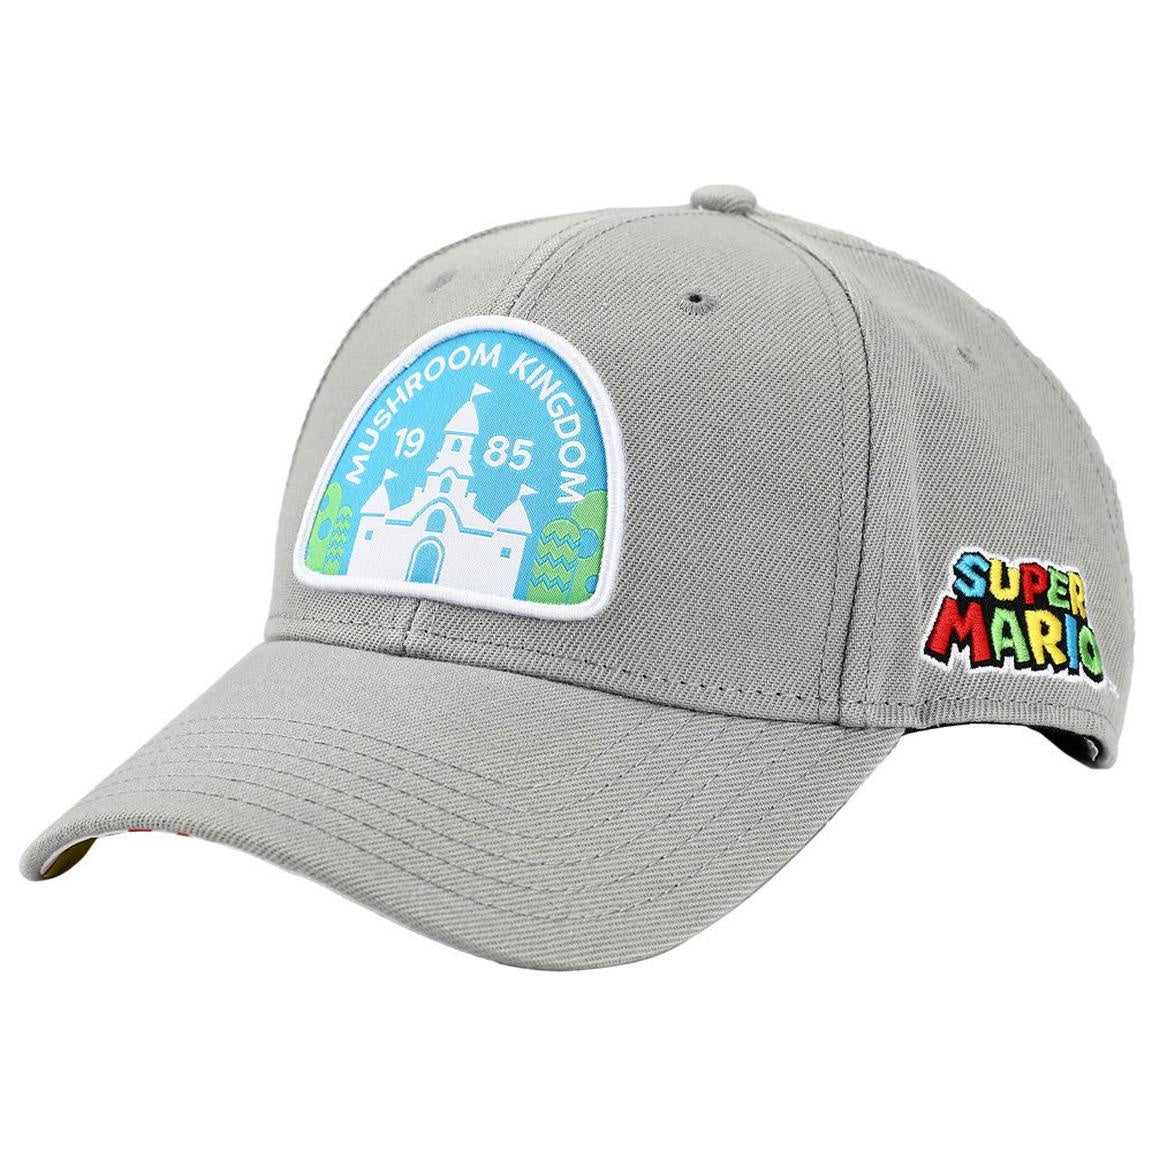 Super Mario Mushroom Kingdom 1985 Hat